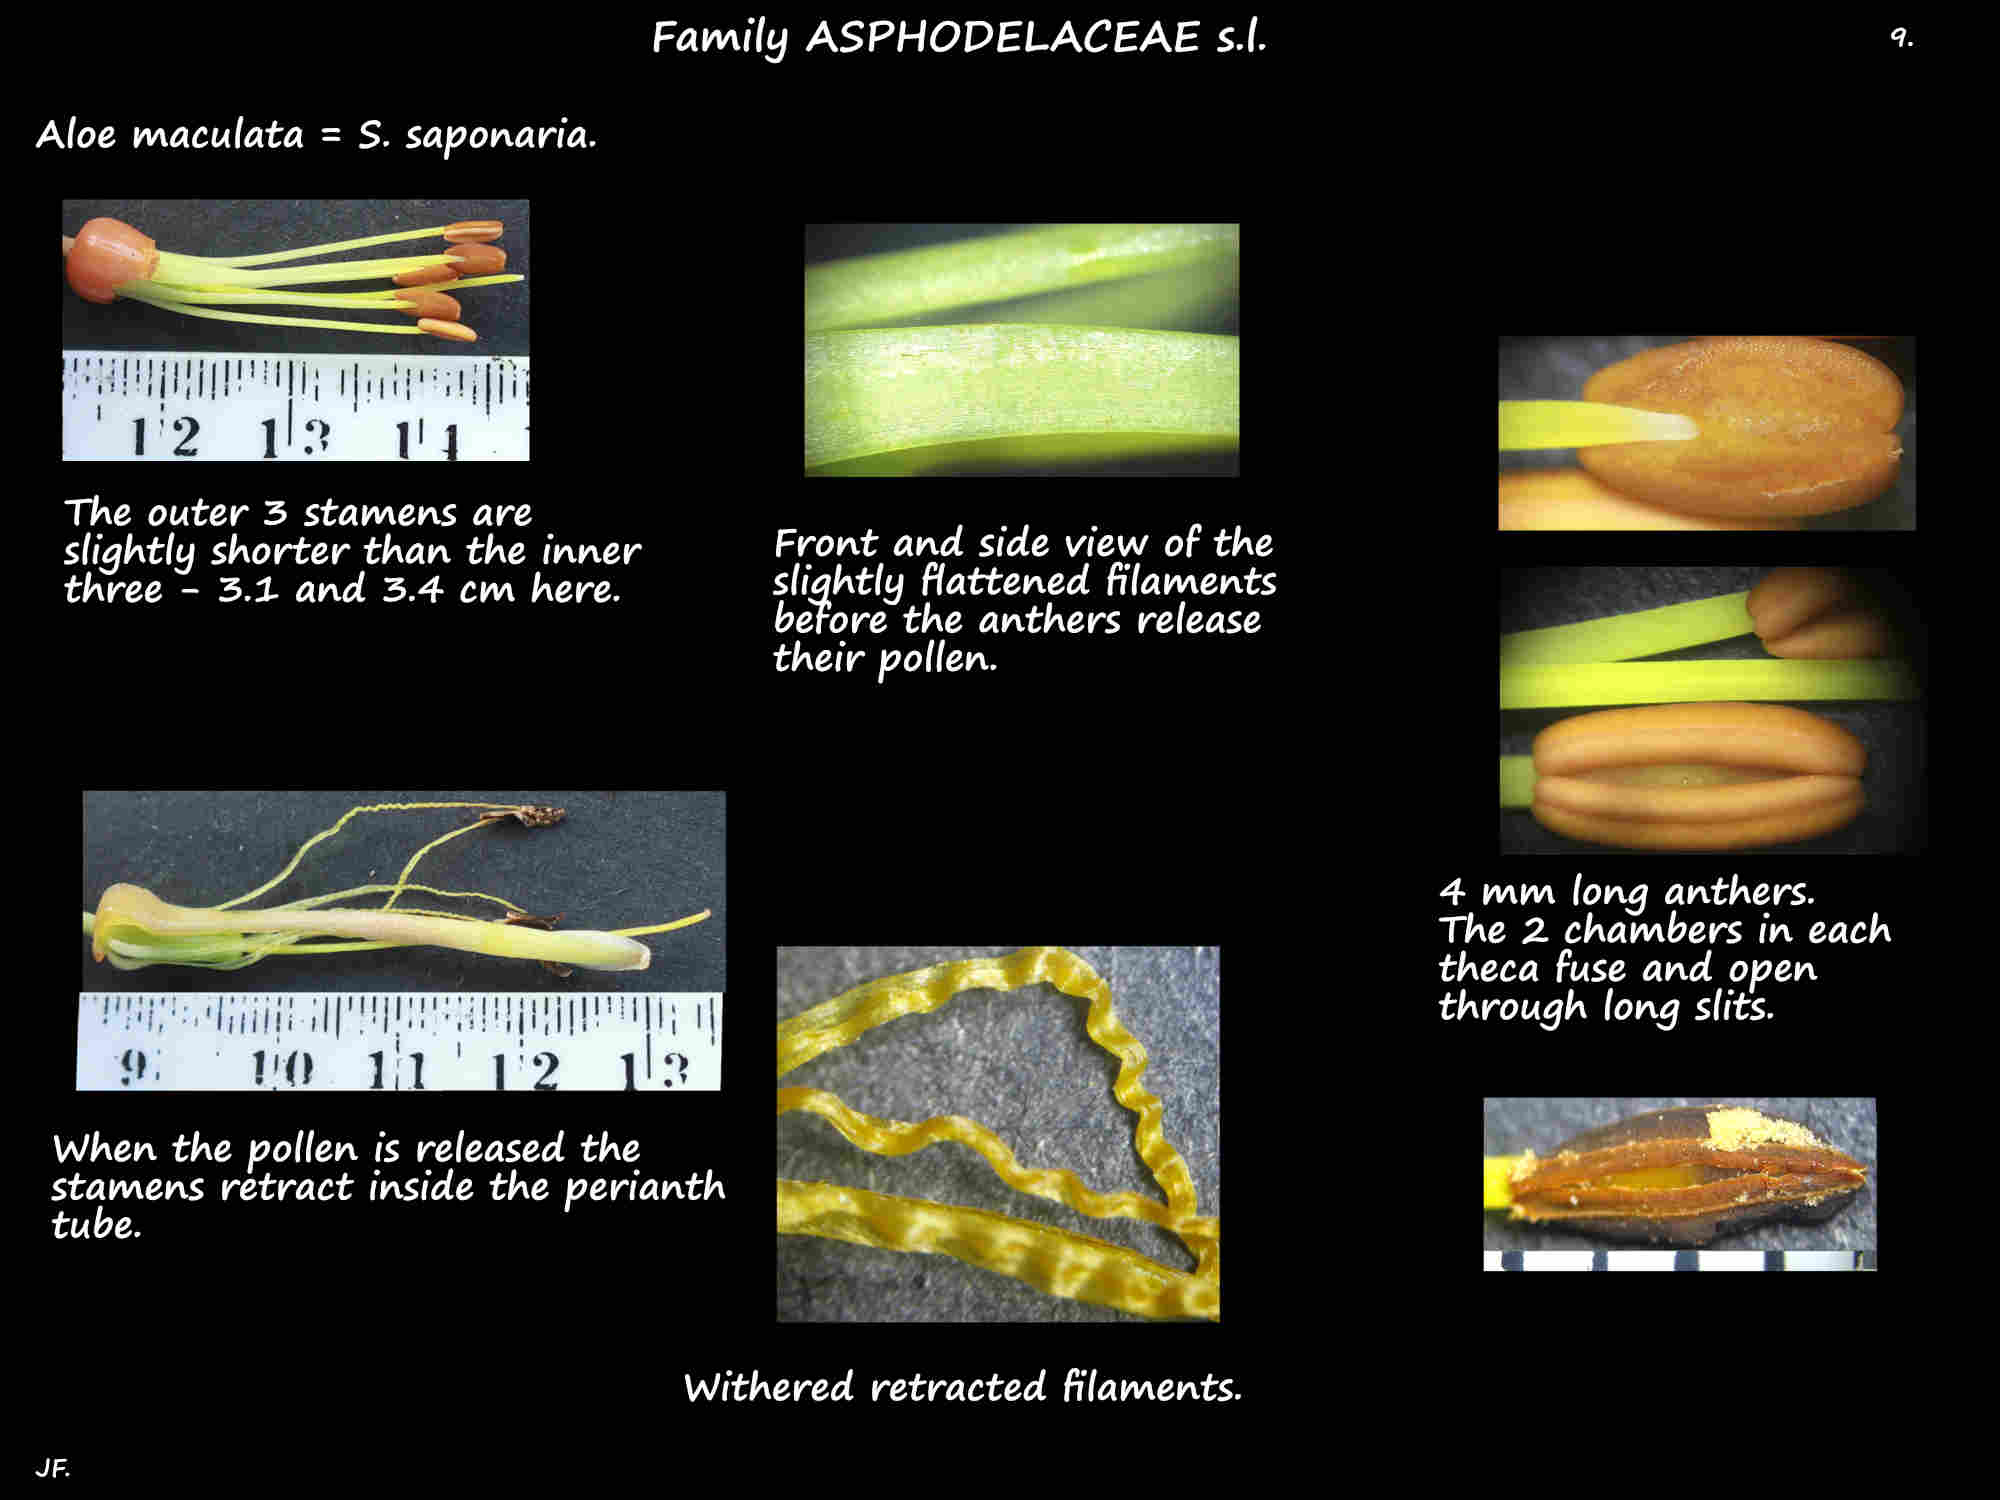 9 Aloe maculata stamens